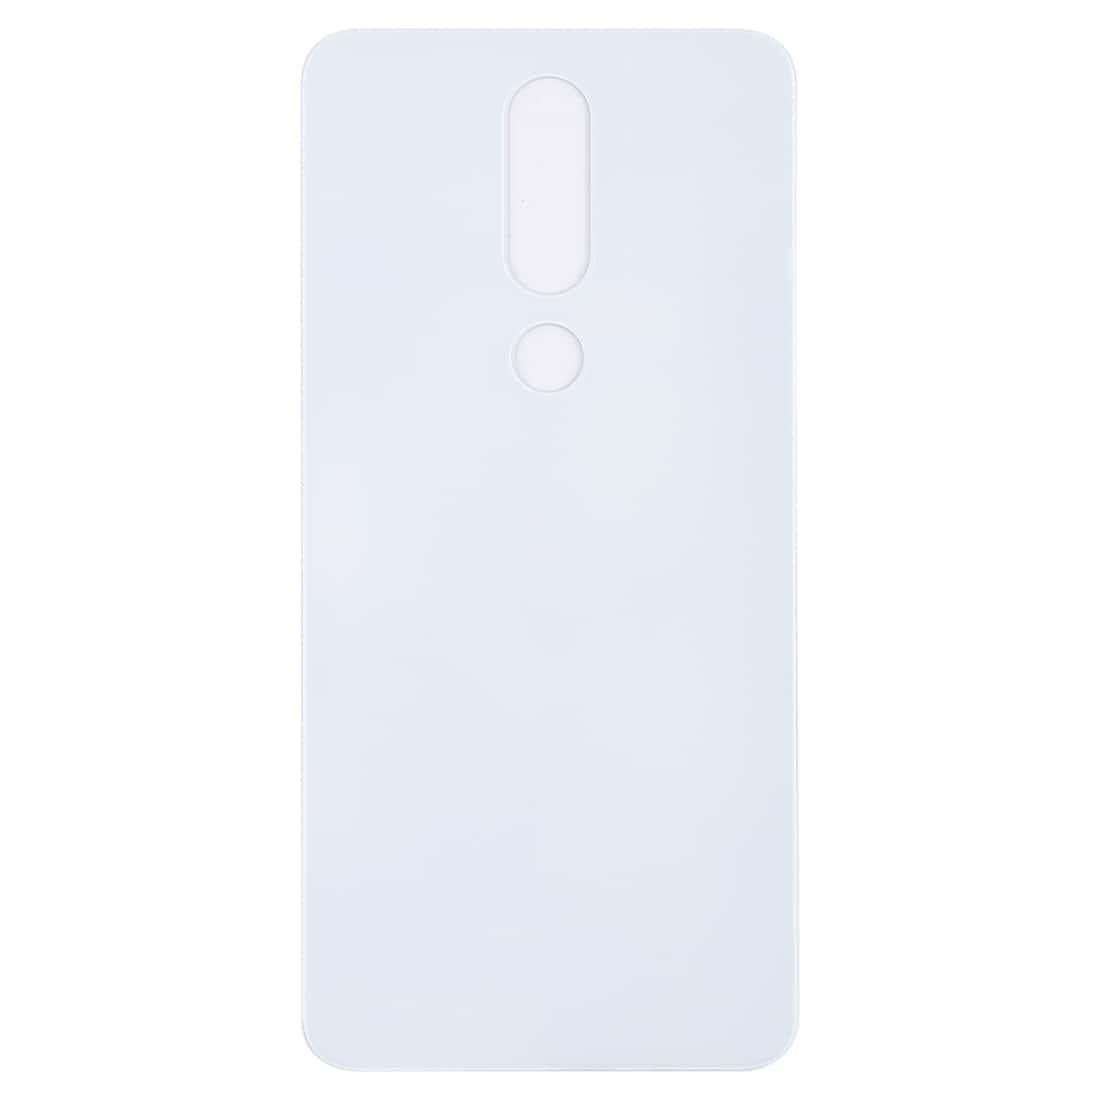 Back Glass Panel for  Nokia 6.1 Plus White